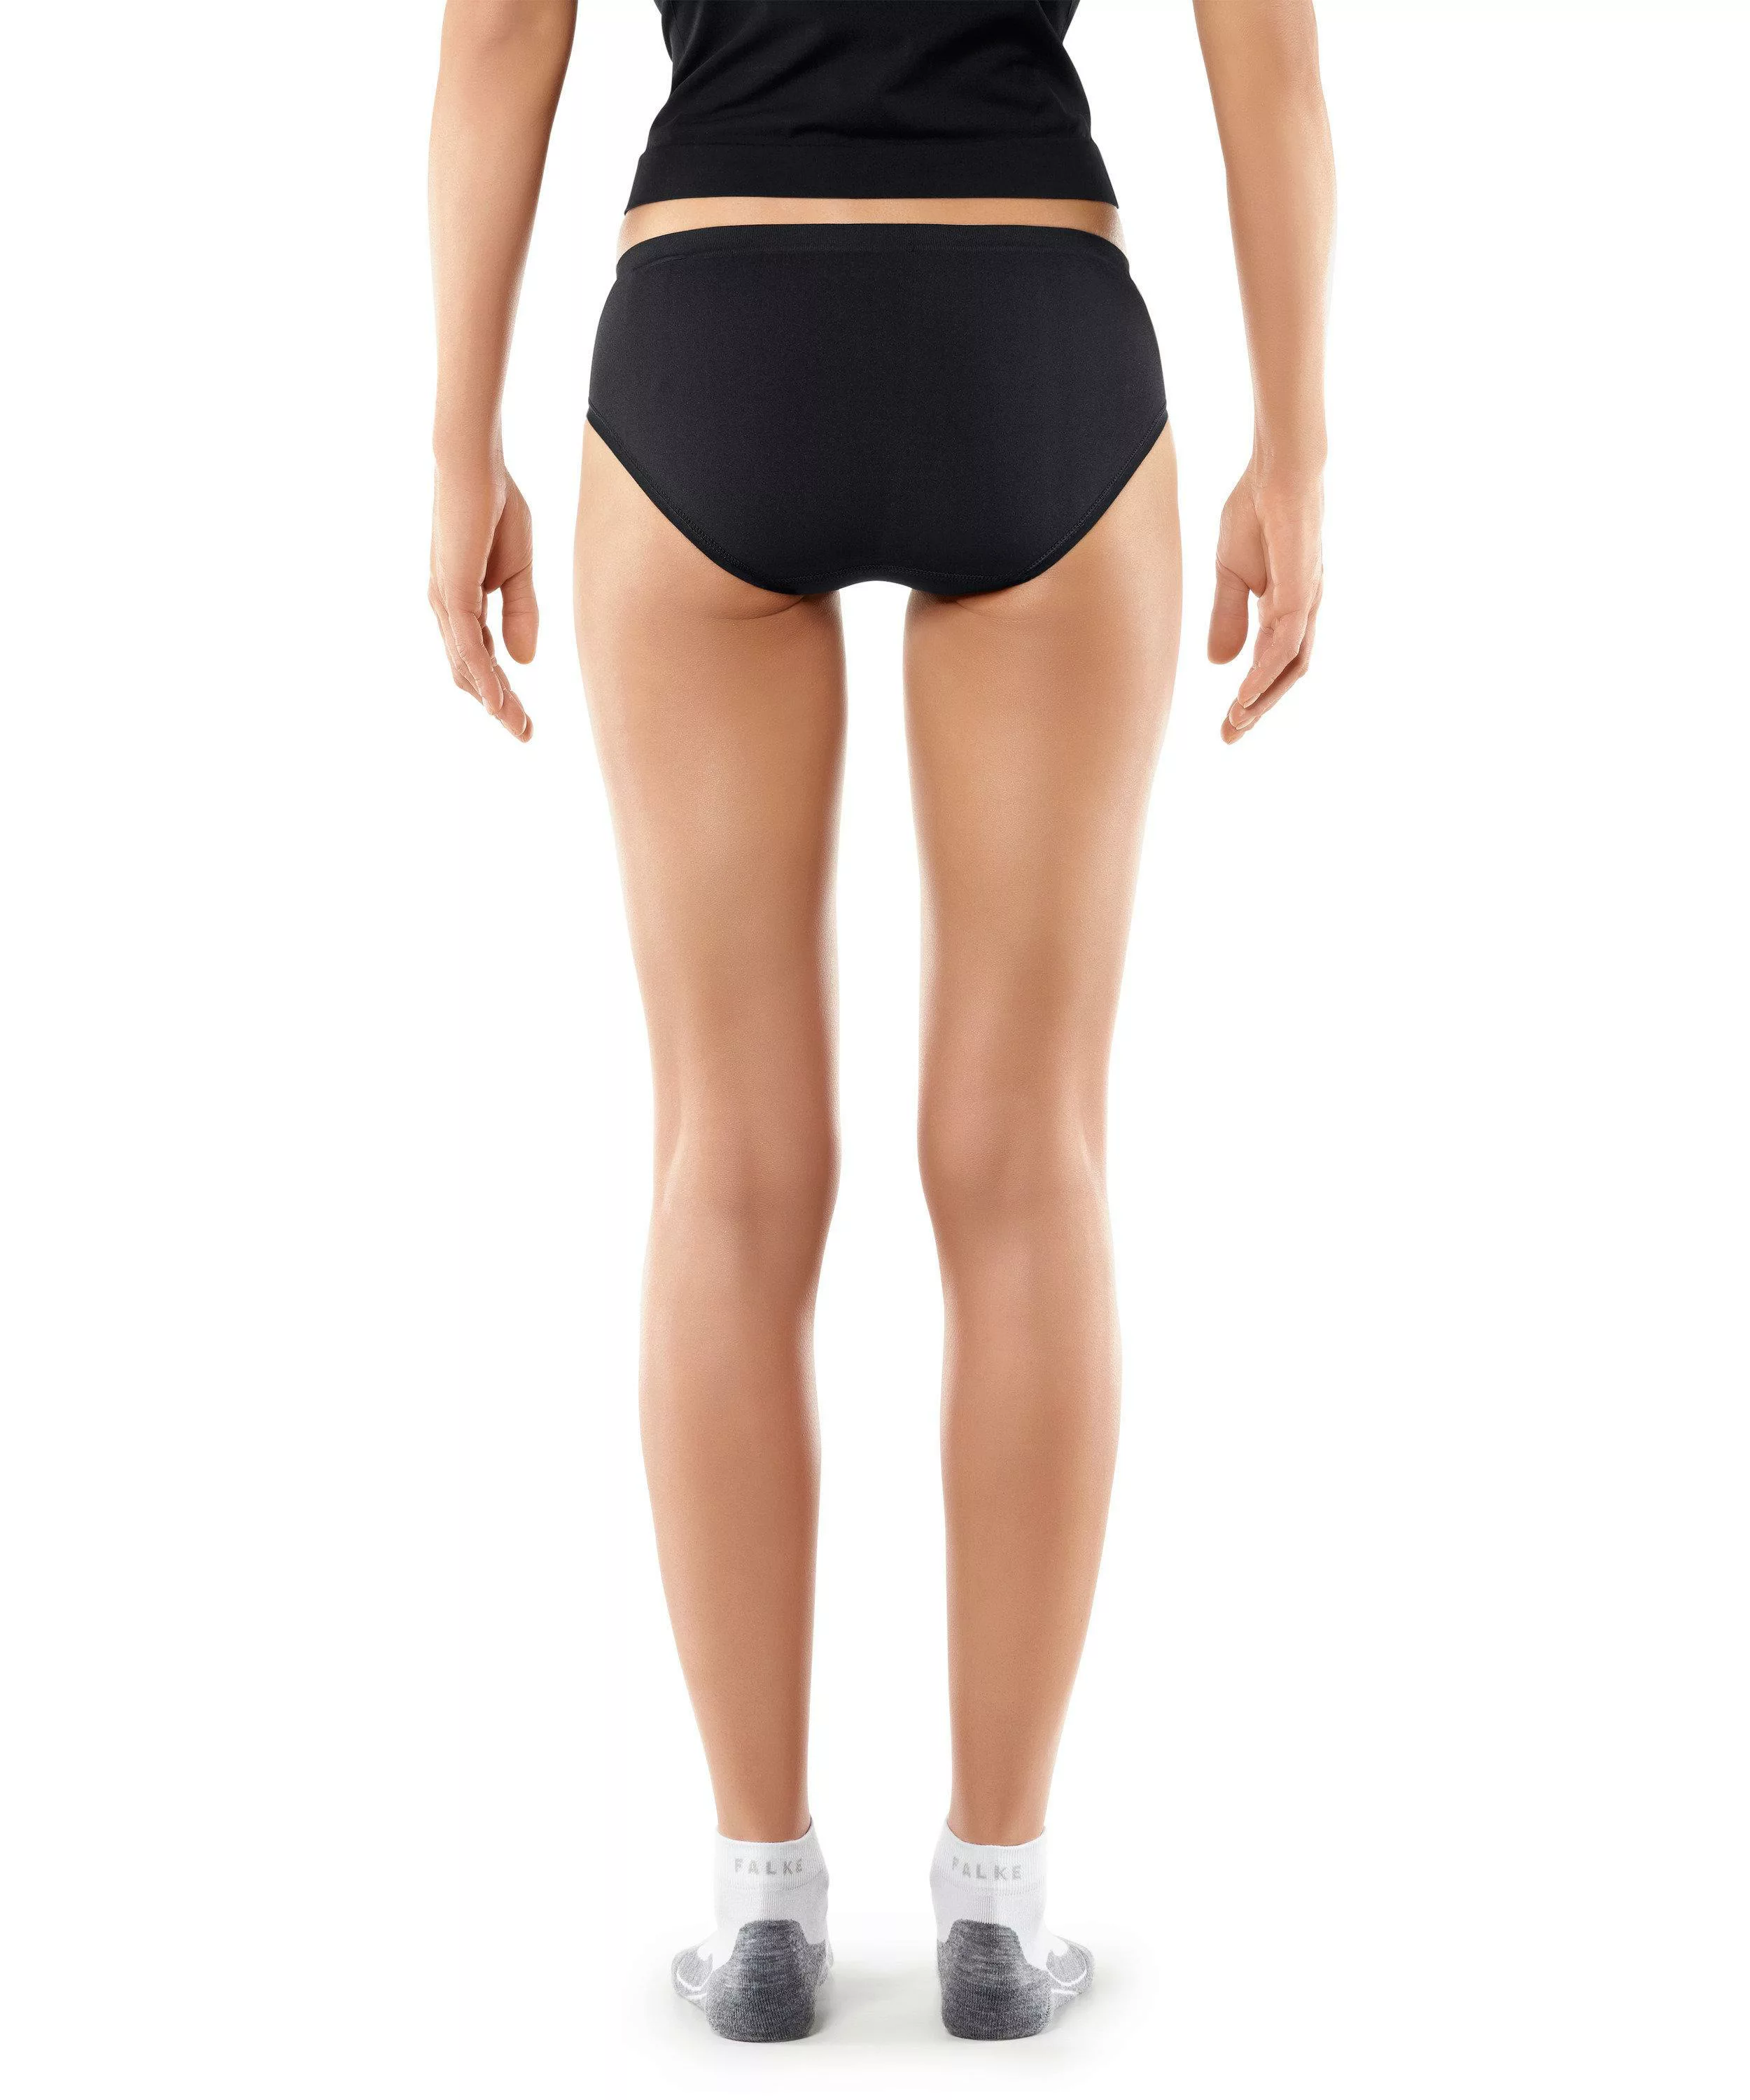 FALKE Damen Panties Cool, M, Schwarz, Uni, 33245-300003 günstig online kaufen